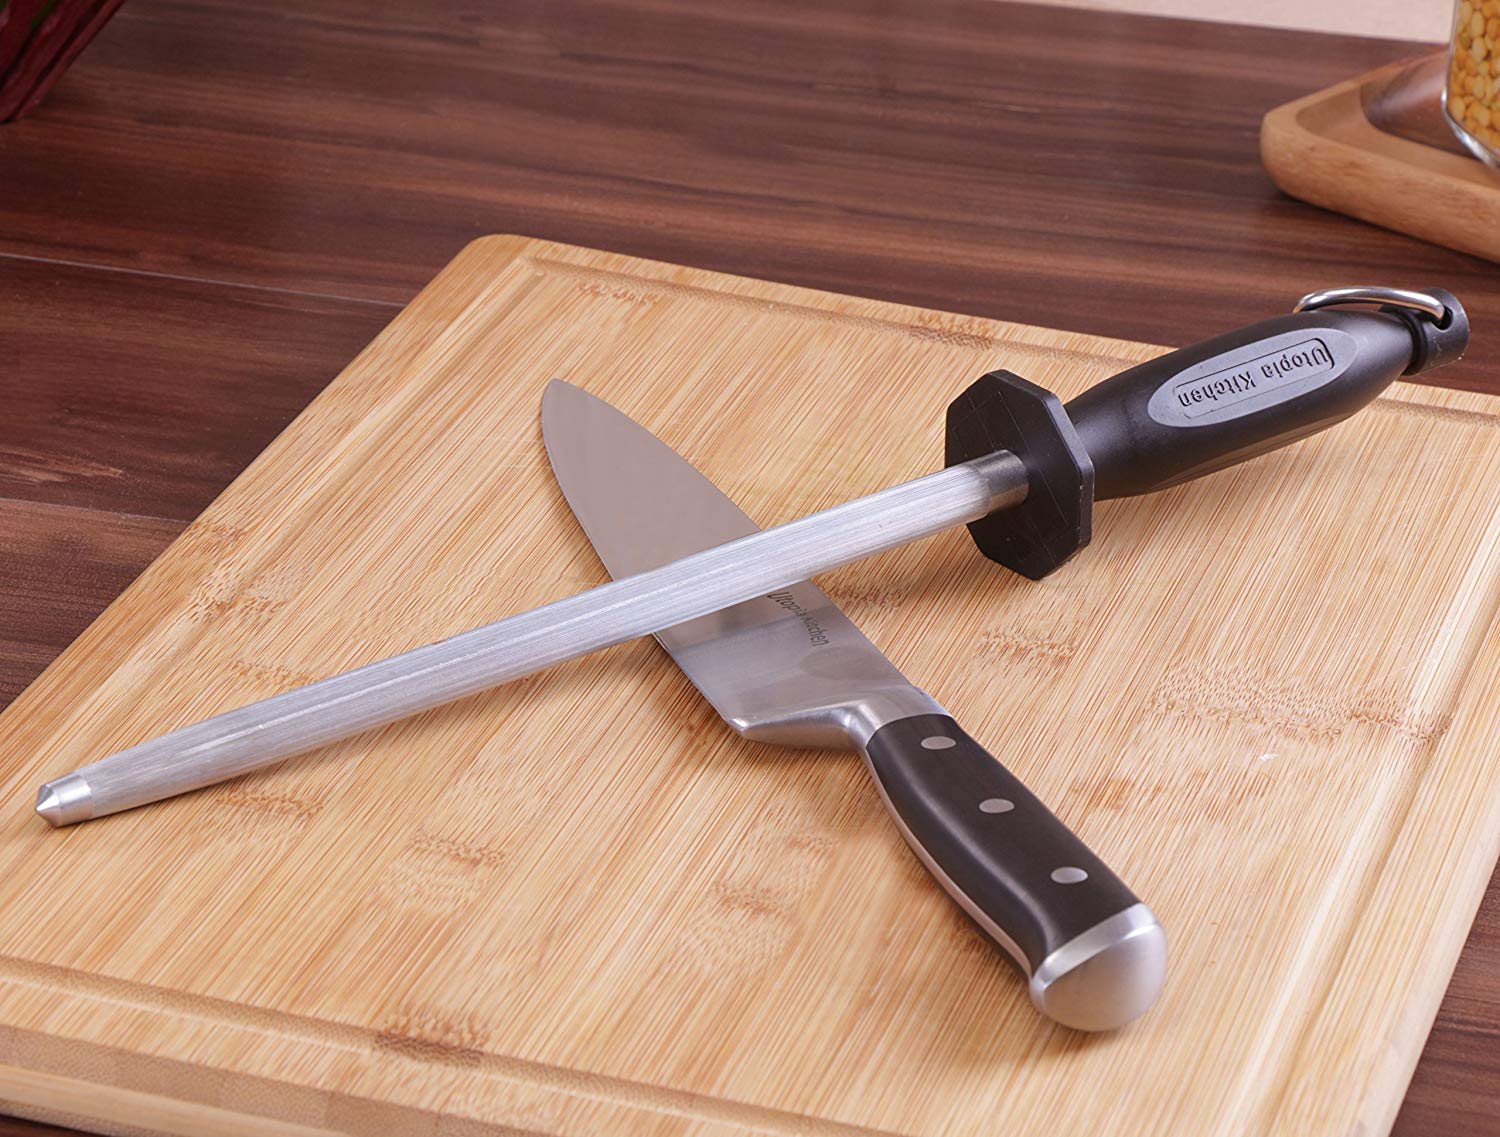  Utopia Kitchen 10 Inch Honing Steel Knife Sharpening Steel  Sharpening Rod - Black: Home & Kitchen